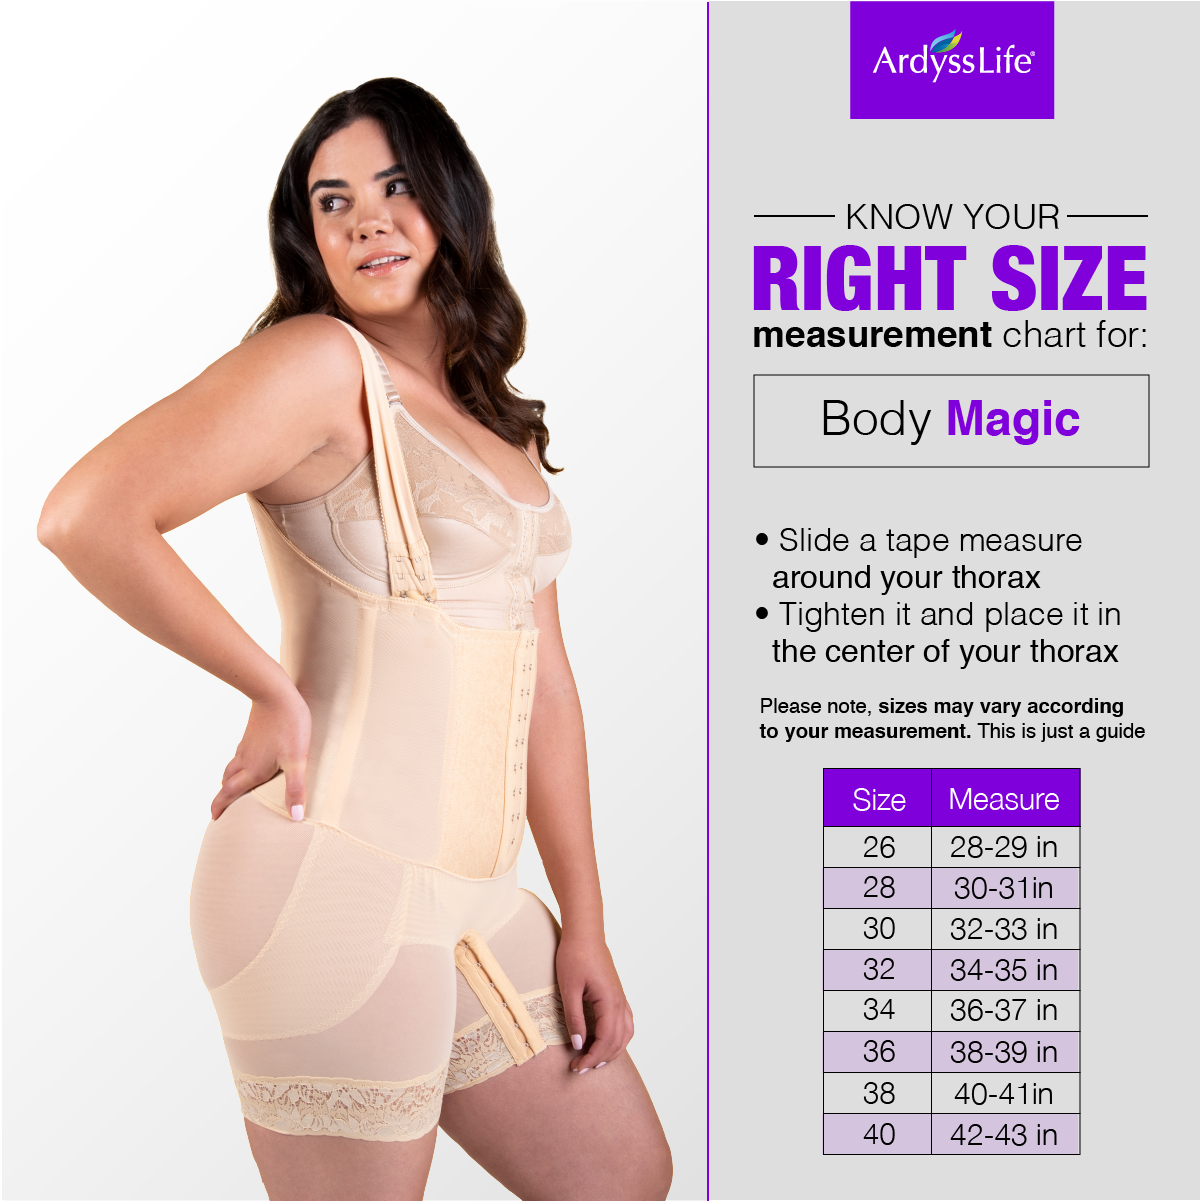 Body Magic – ArdyssLife